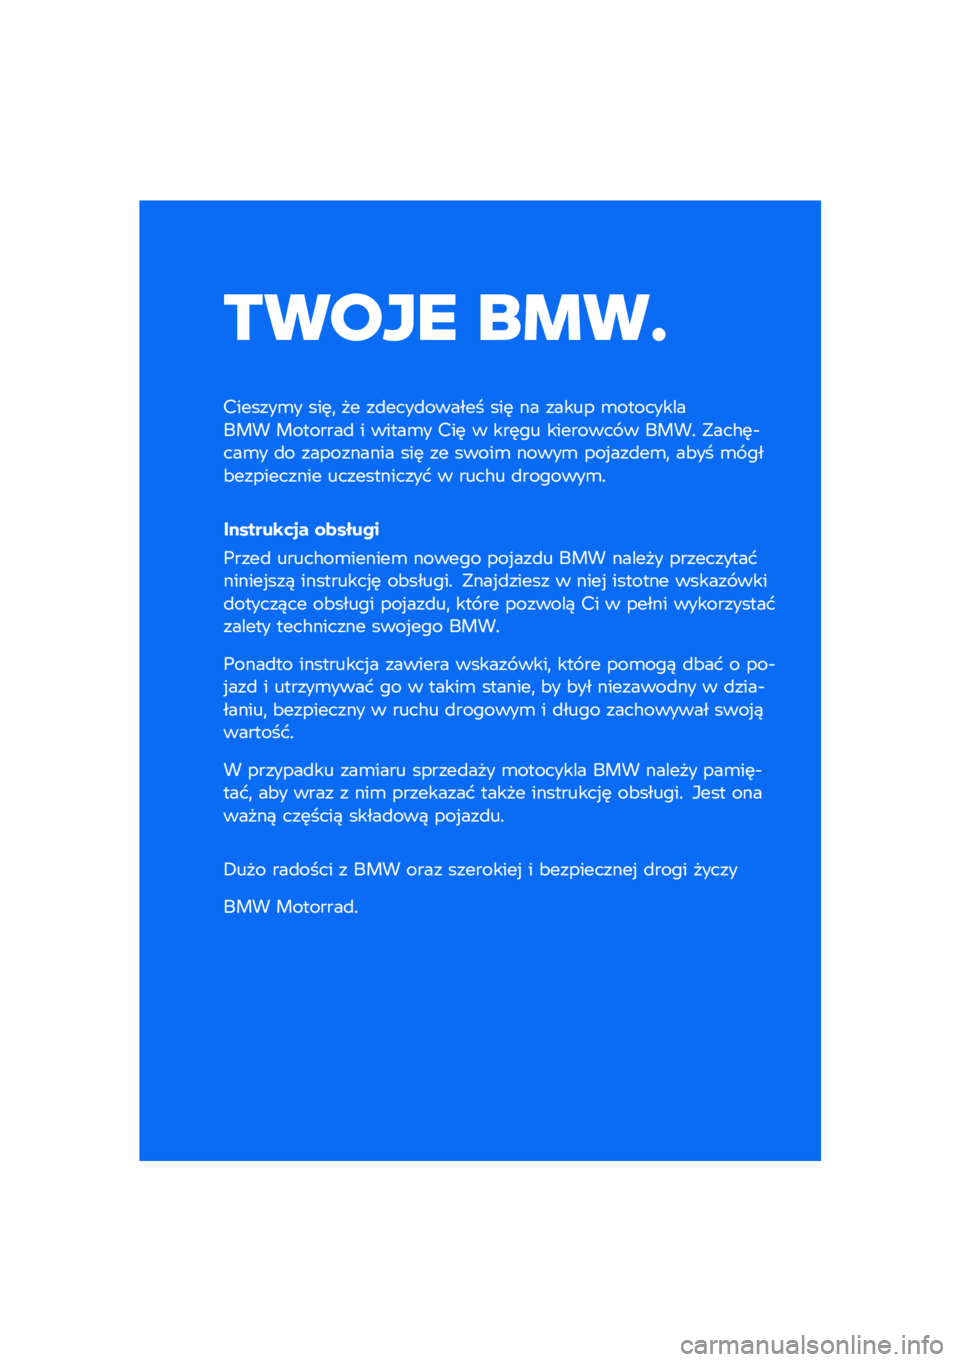 BMW MOTORRAD F 900 R 2021  Instrukcja obsługi (in Polish) ����� ��\b��	
�������\b� ���	�
 �� ��
����
������ ���	 �� ����� �\b����������� ��������
 � �����\b� ���	 � ���	�� �������� �